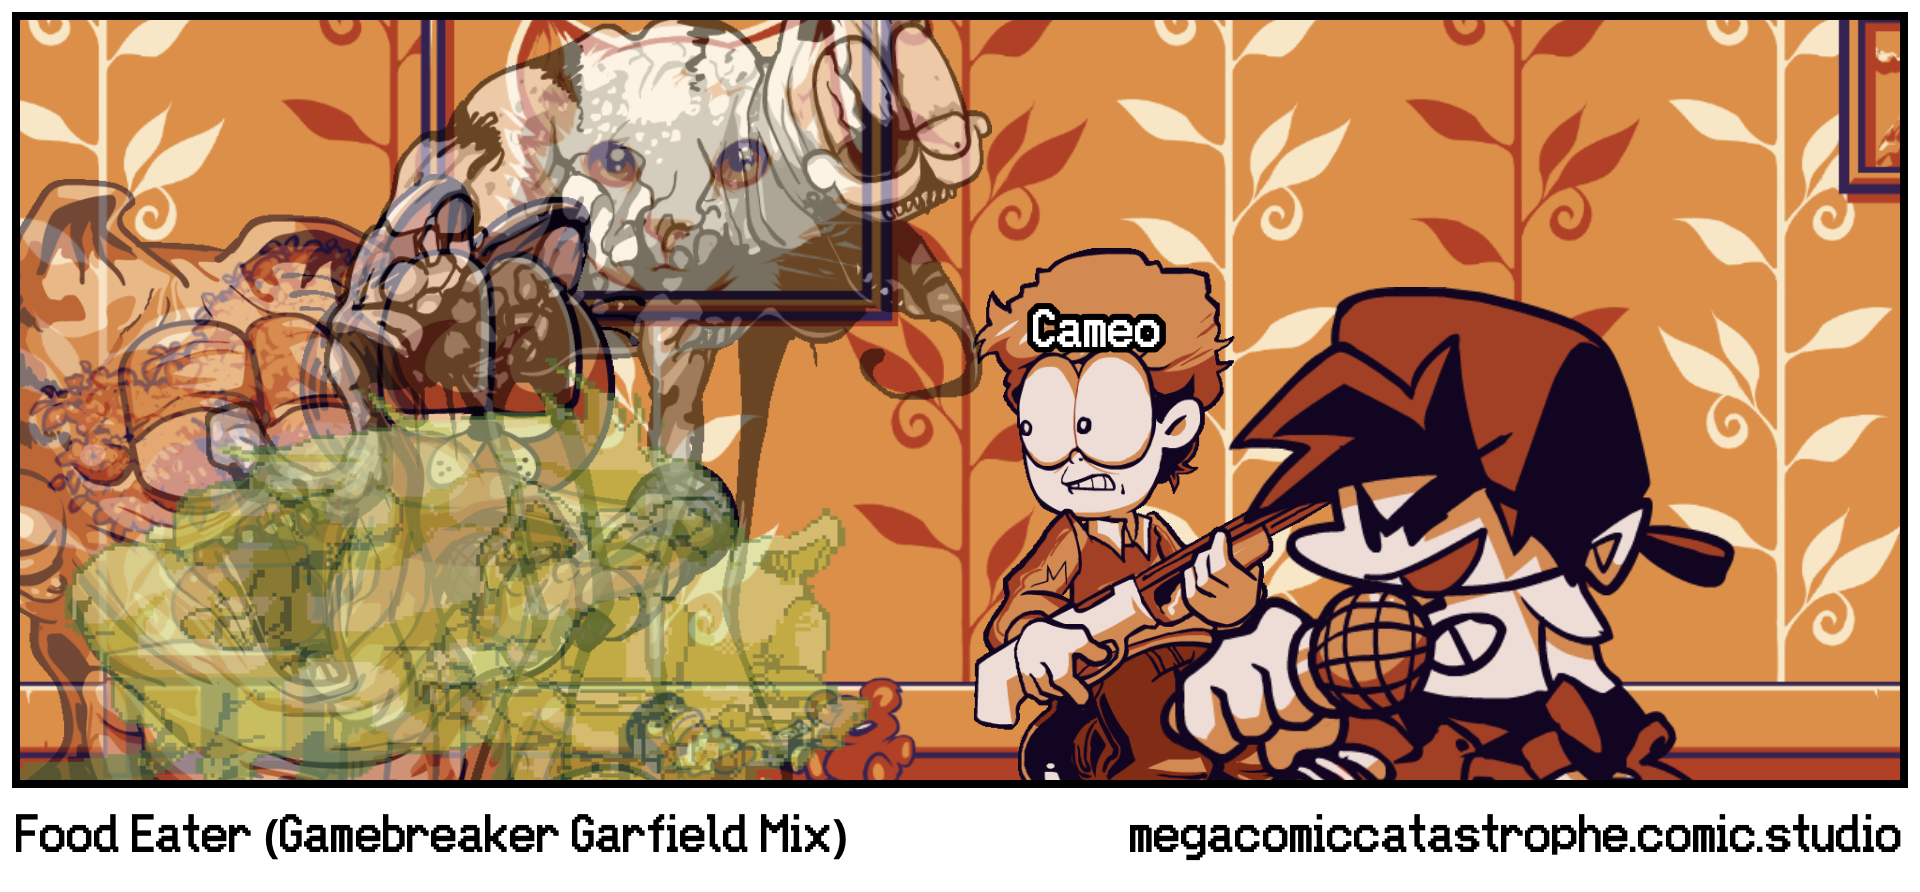 Food Eater (Gamebreaker Garfield Mix)